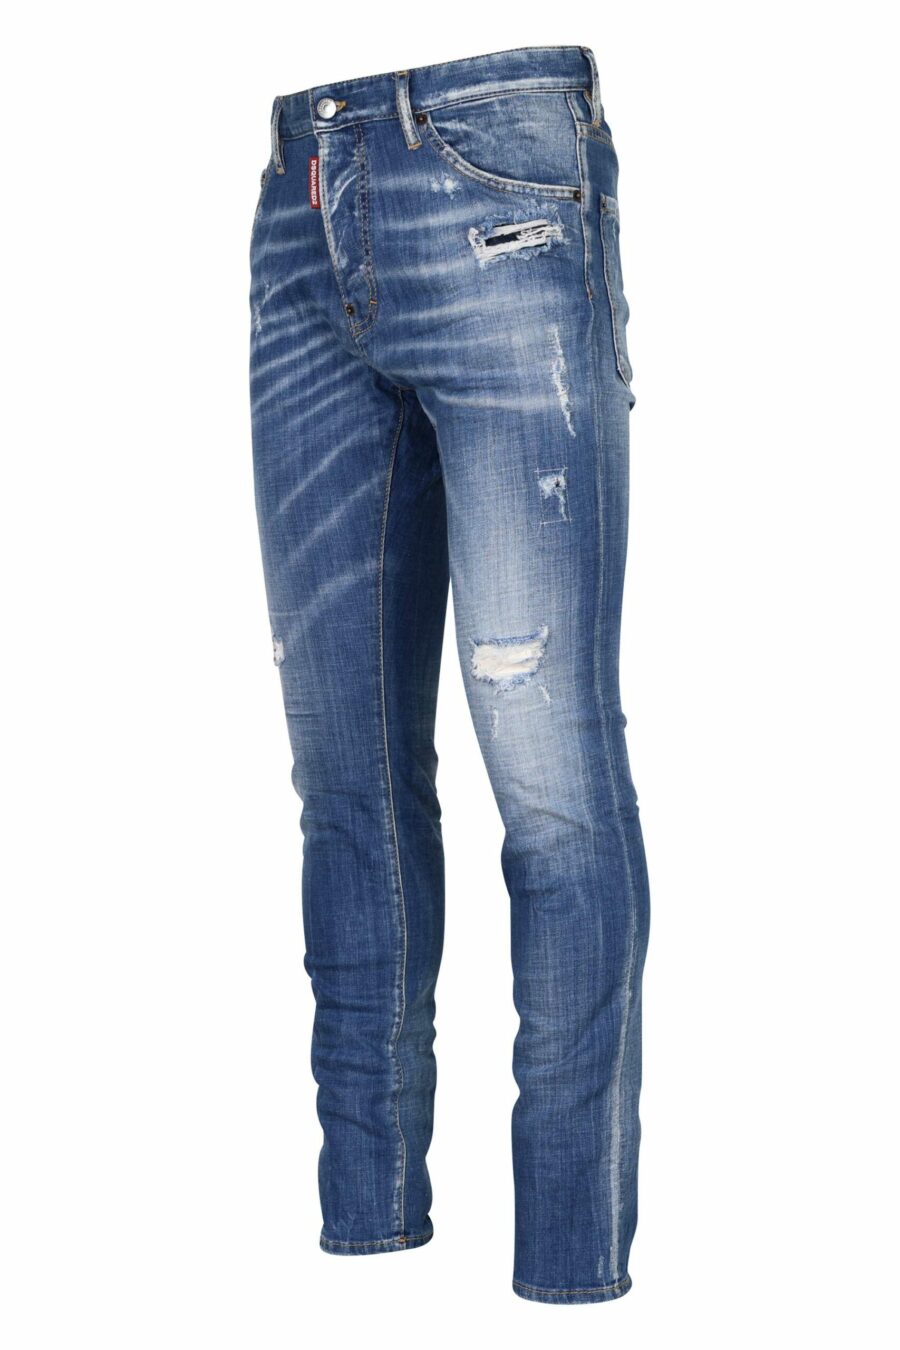 Pantalón vaquero azul claro "cool guy jean" con semirotos y semidesgastado - 8054148311414 1 scaled